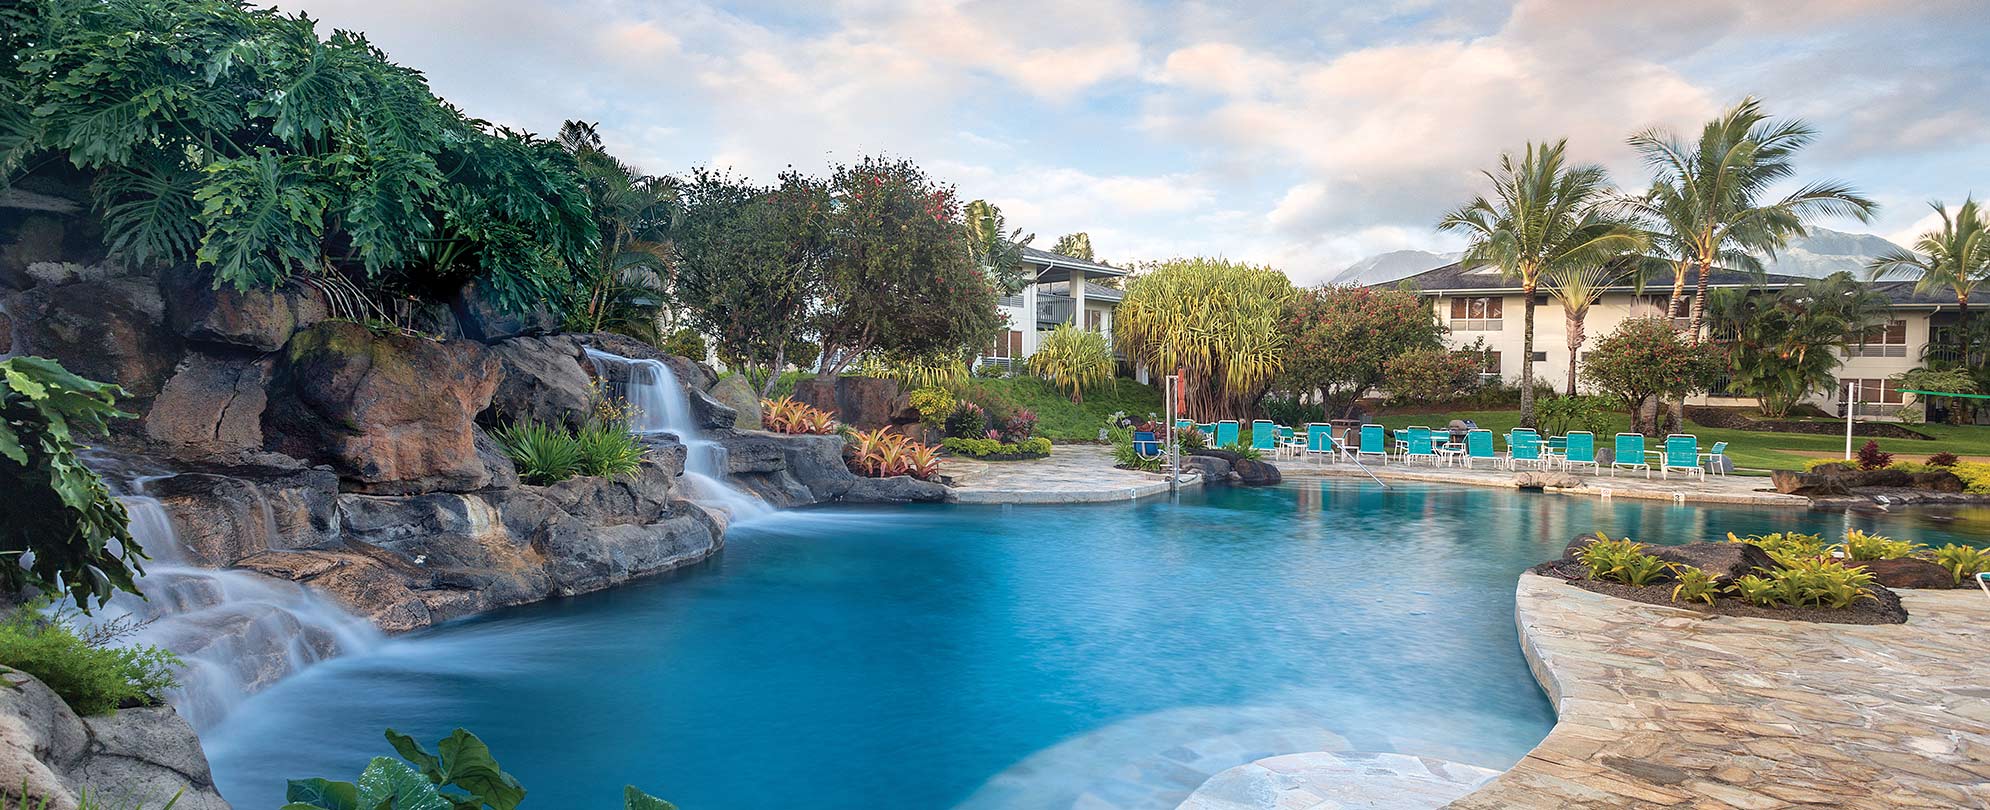 A lagoon style pool with lush greenery at Club Wyndham Bali Hai Villas.